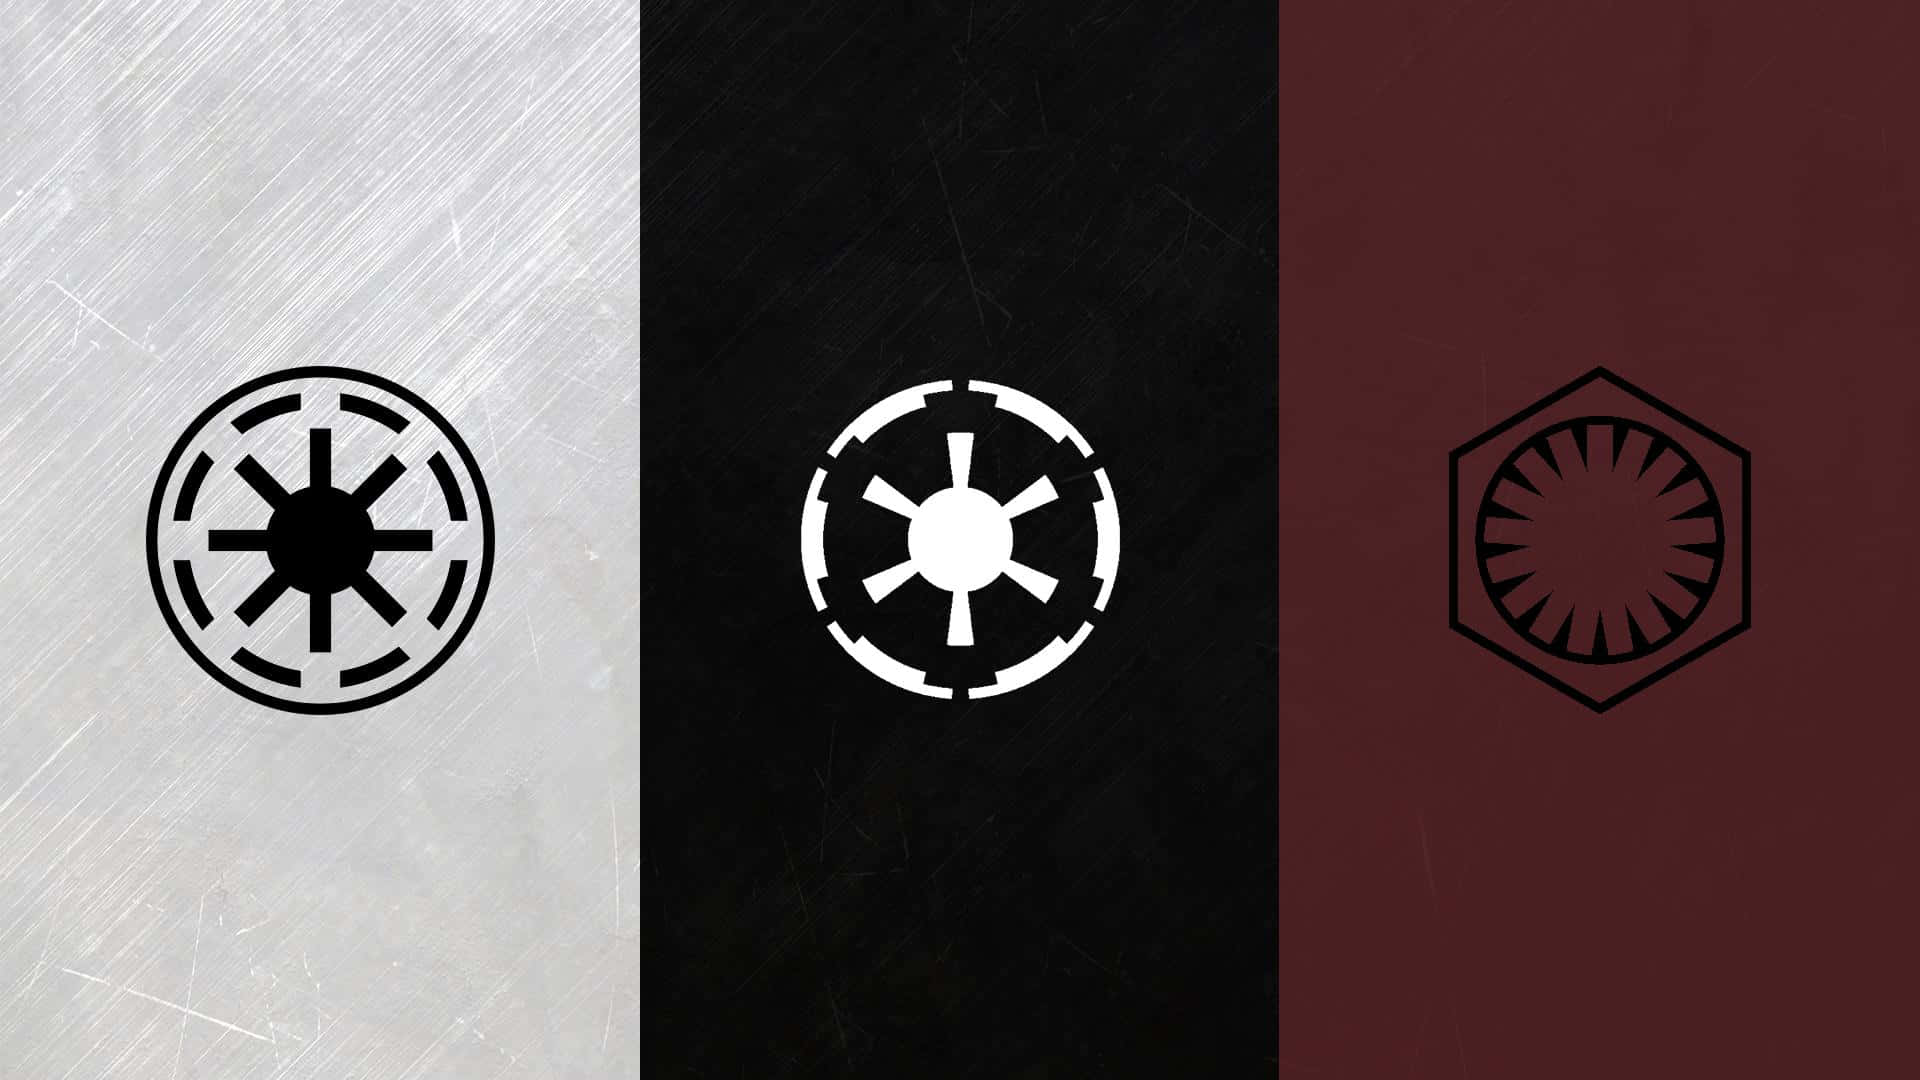 Starwars Logos In Verschiedenen Farben Wallpaper